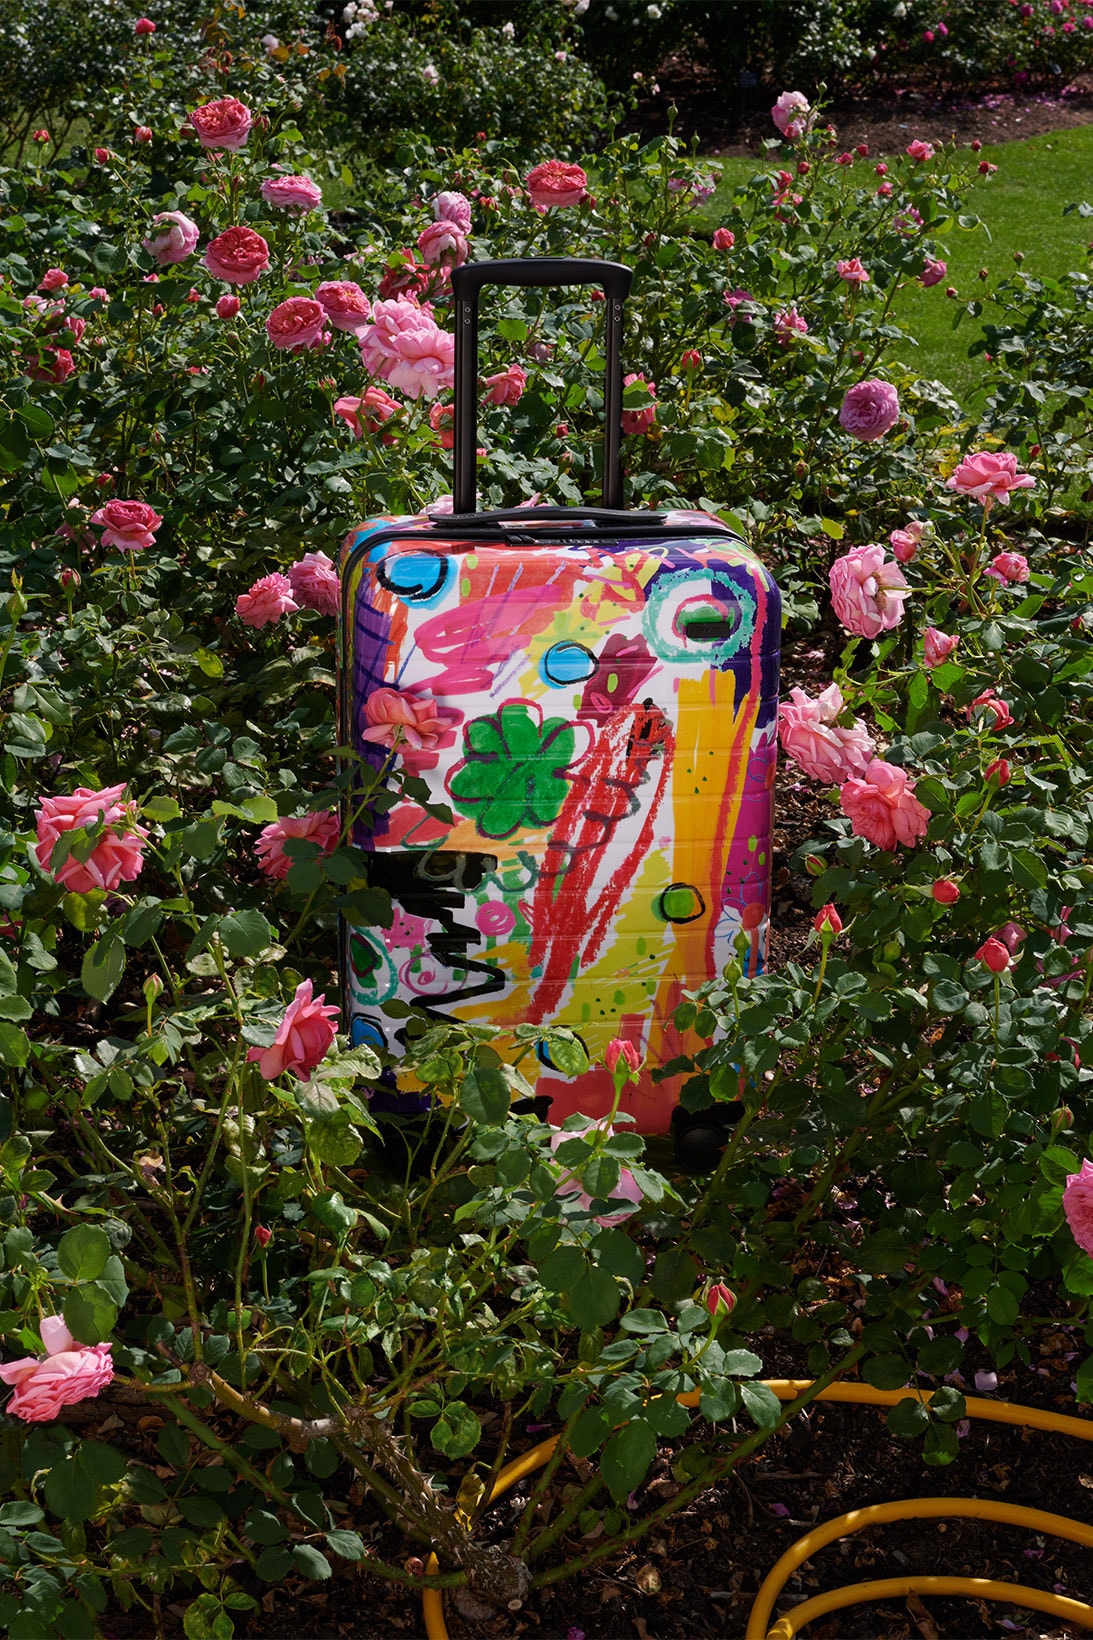 Away Ashish Vaquera Palomo Spain Designer Collaboration Suitcases Release Info